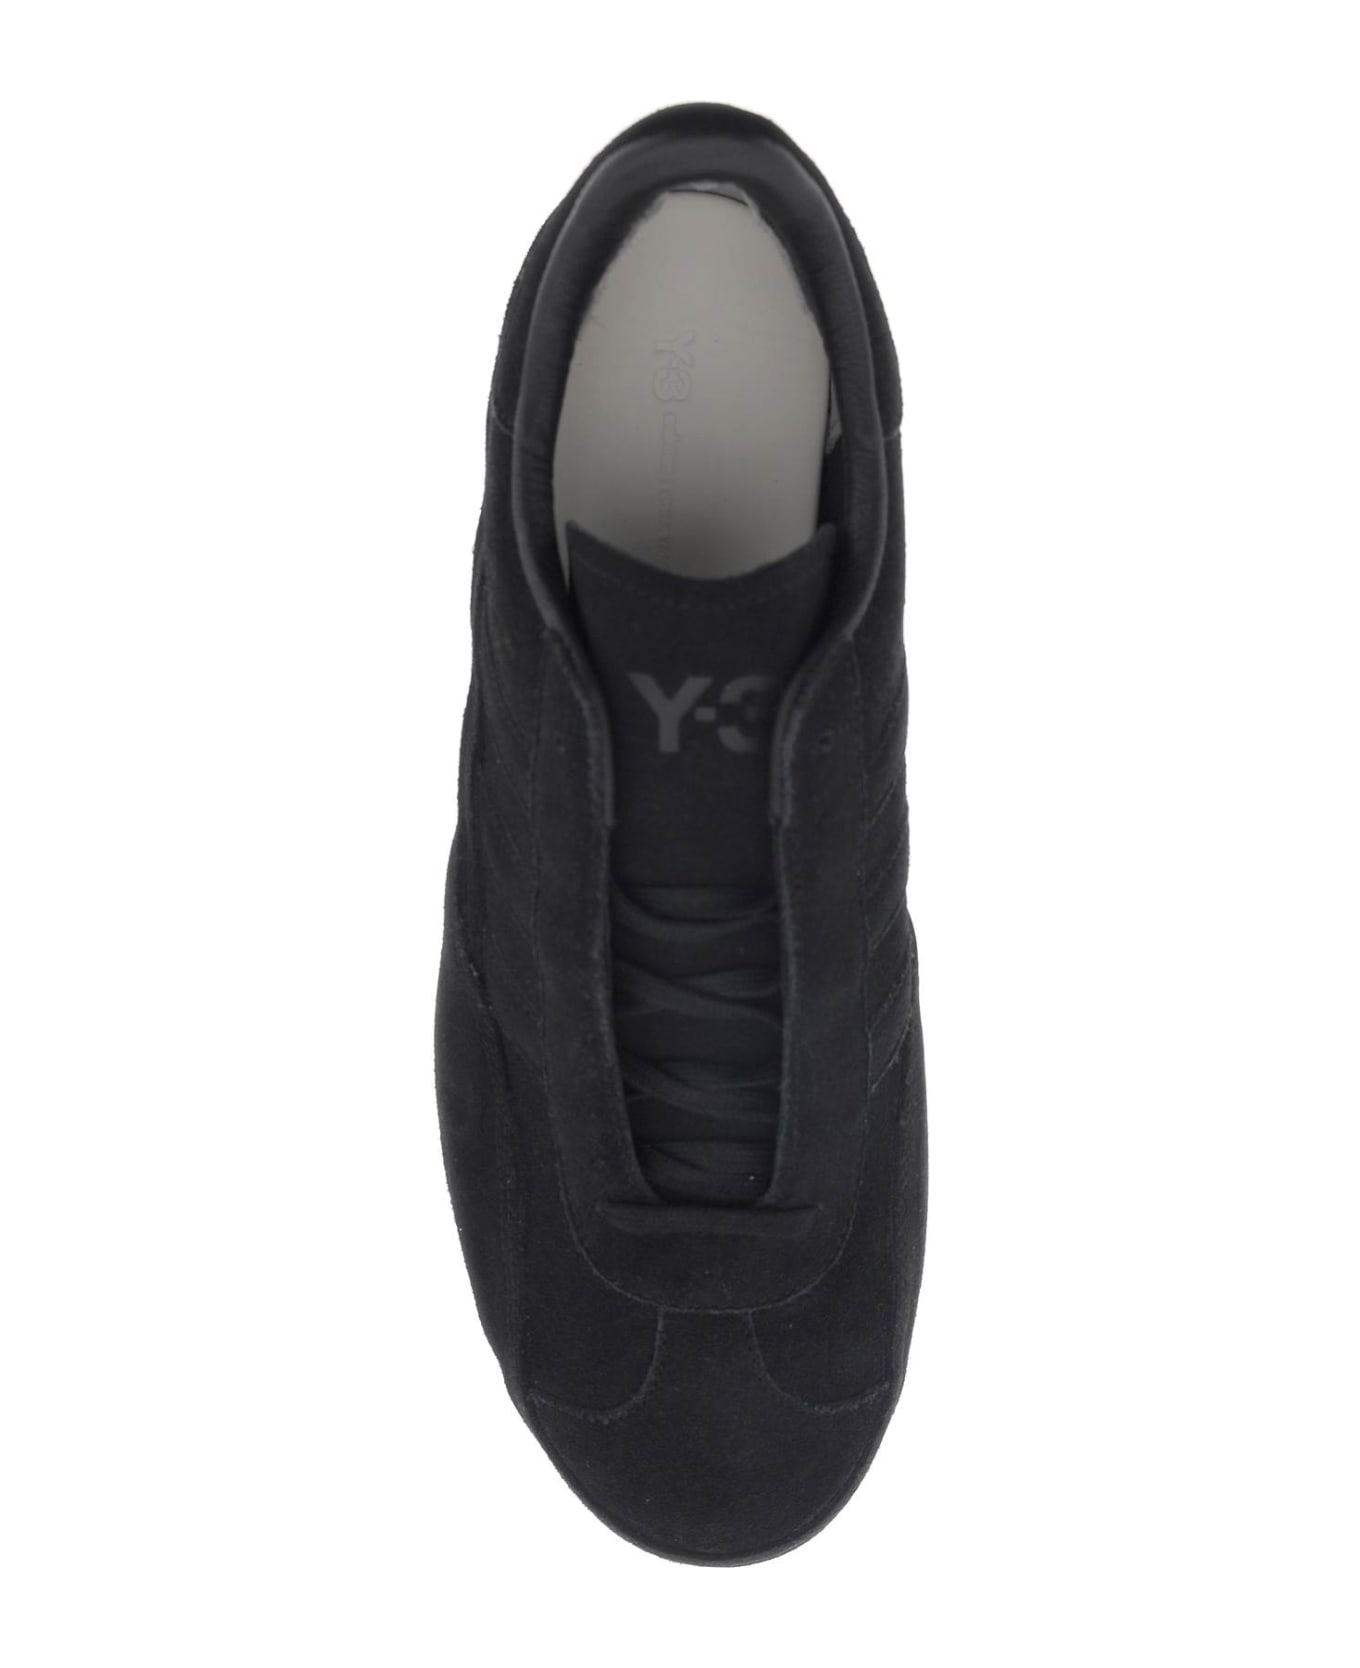 Y-3 Gazelle Sneaker - BLACK BLACK BLACK (Black)